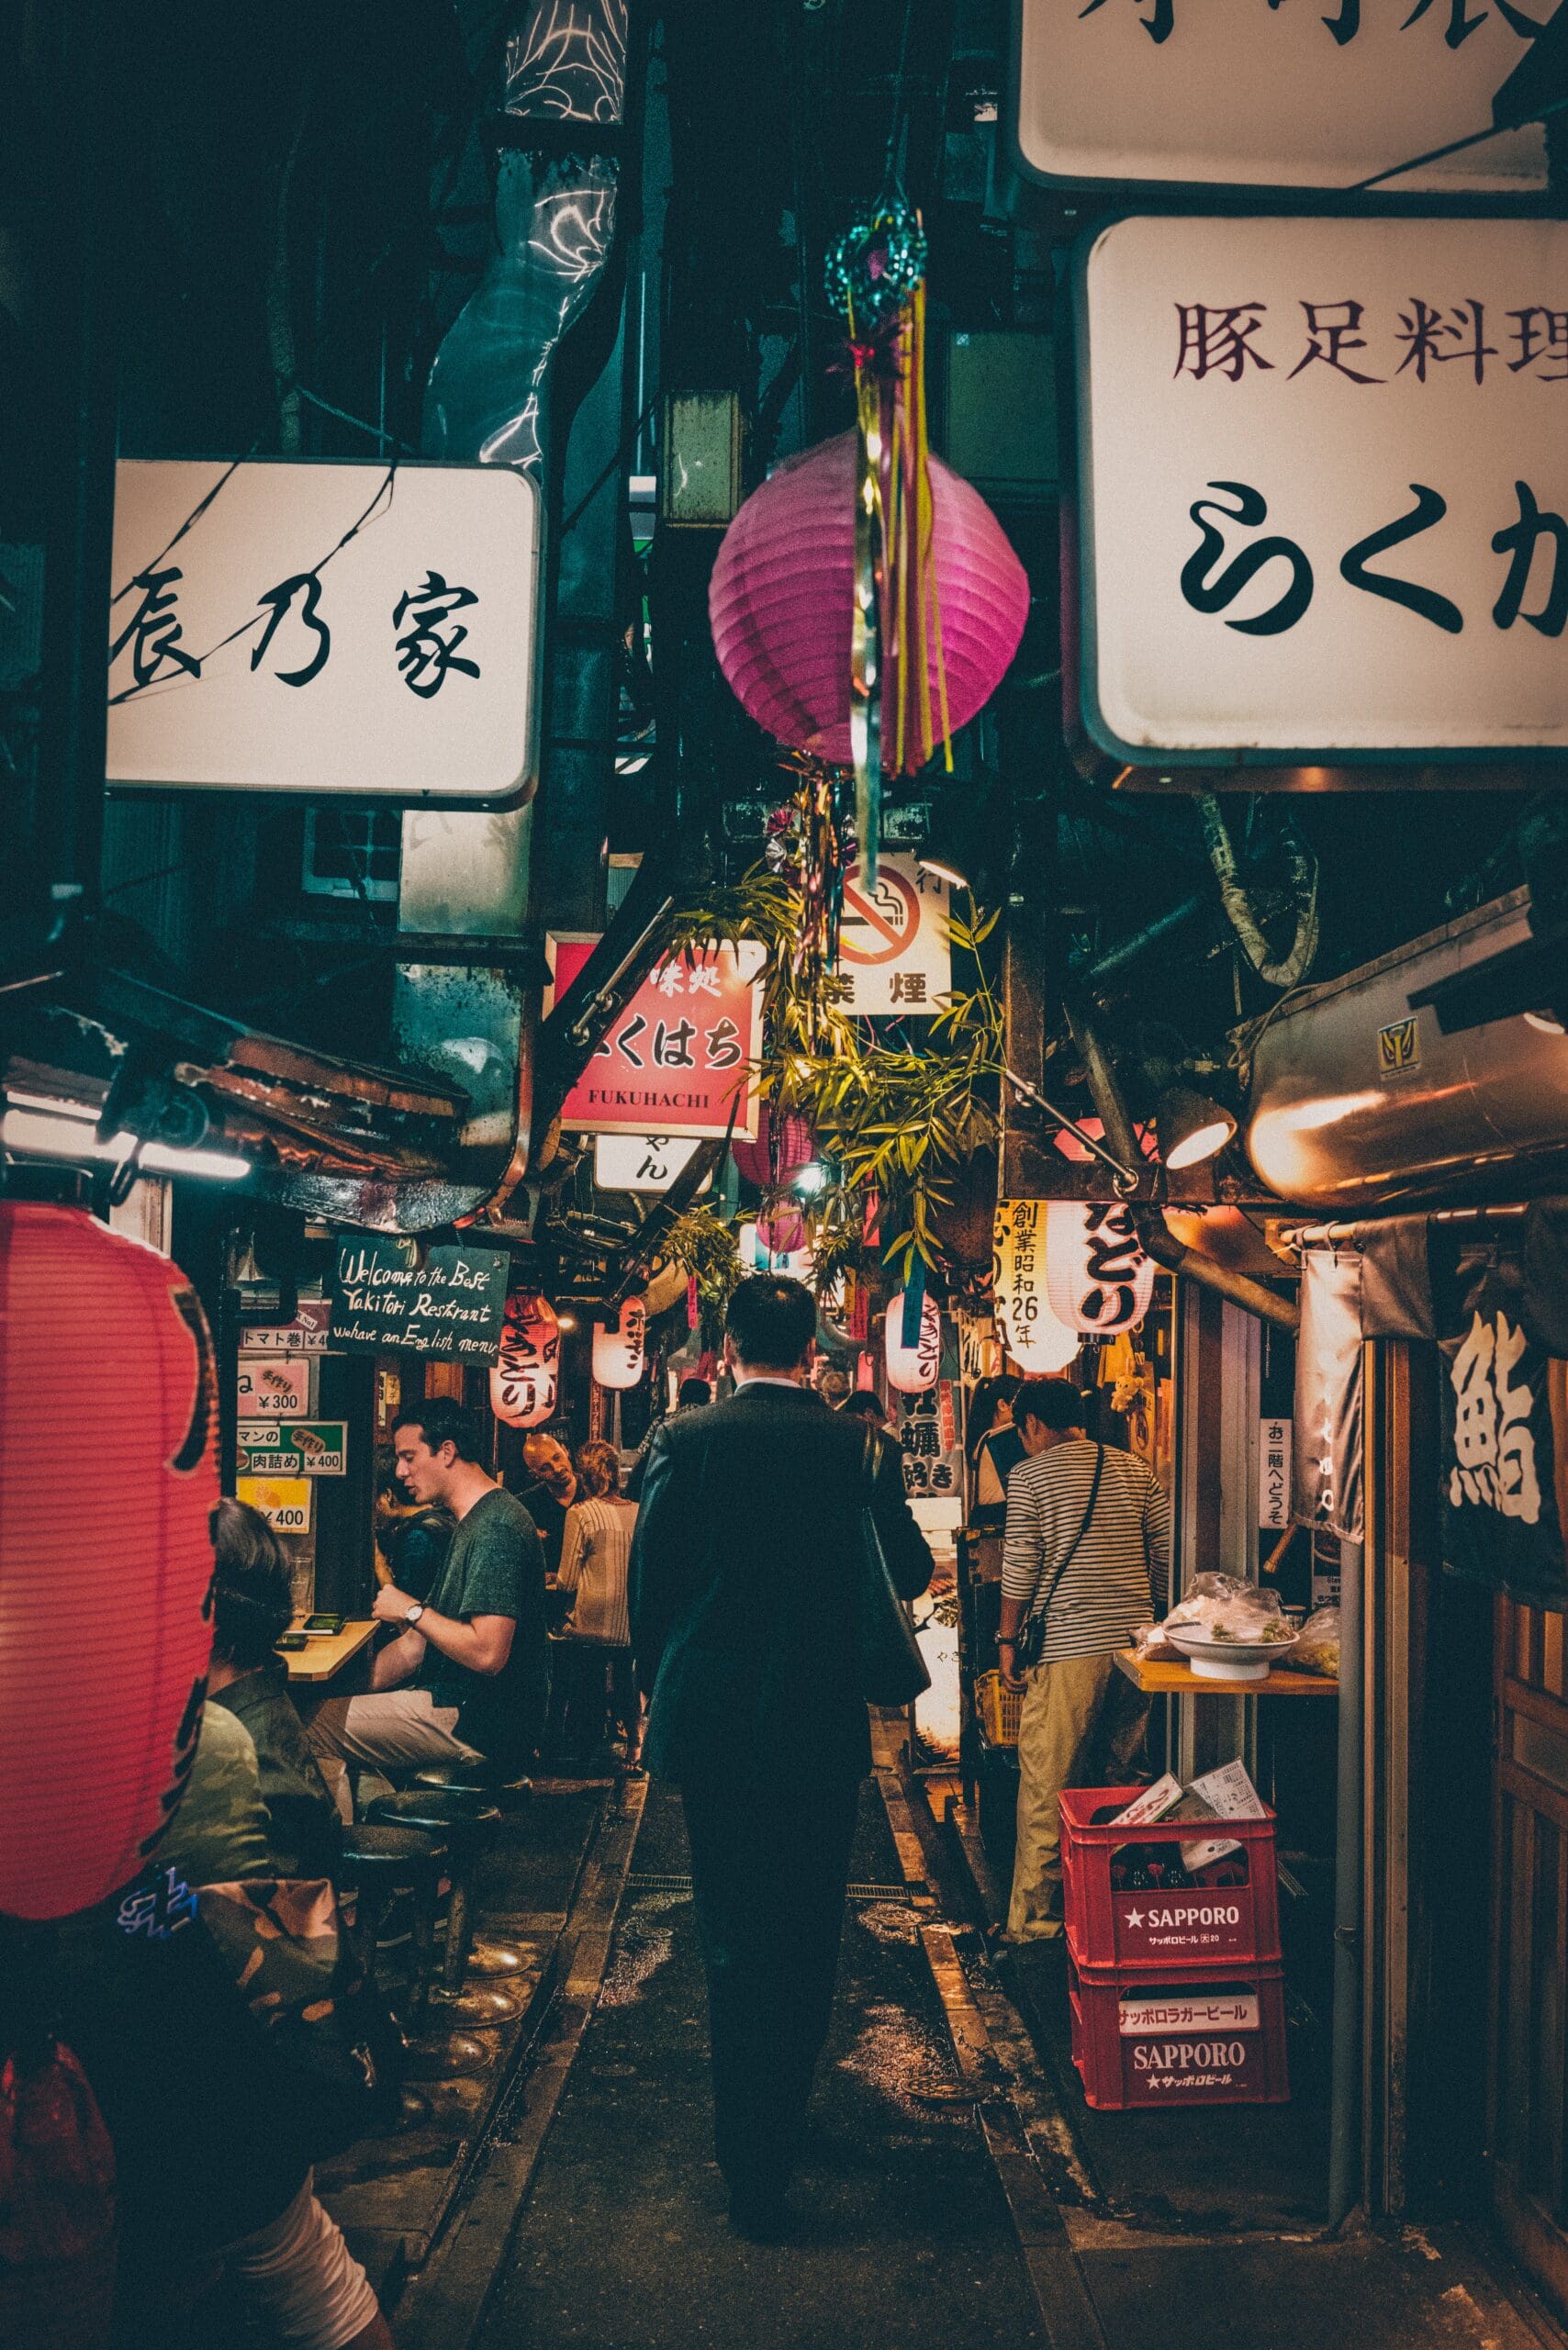 Photo of the nighttimee street scene in Japan by Chris Yang for unsplash